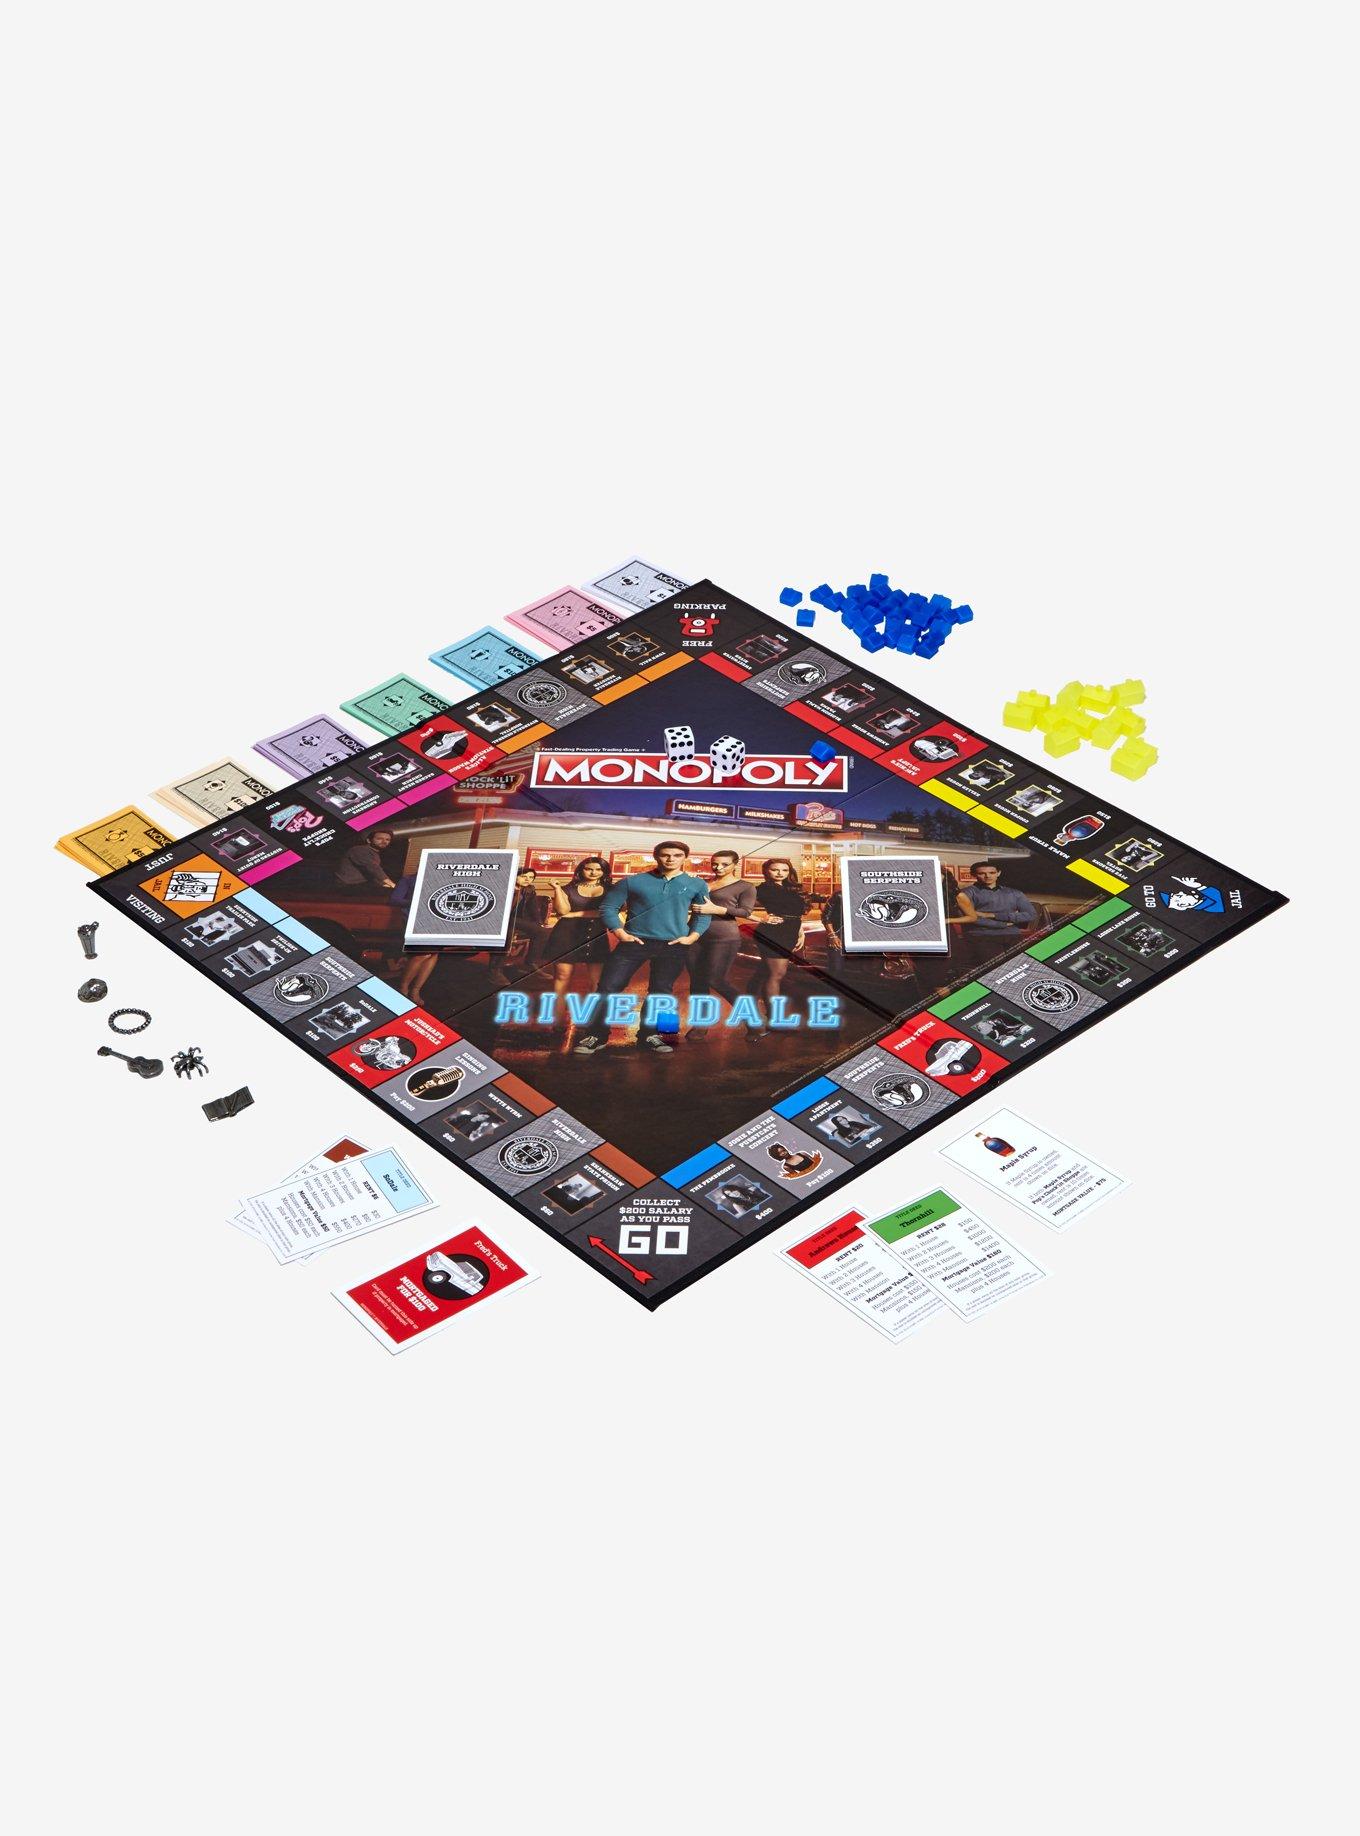 Monopoly Riverdale - jeu Monopoly Films & Séries TV